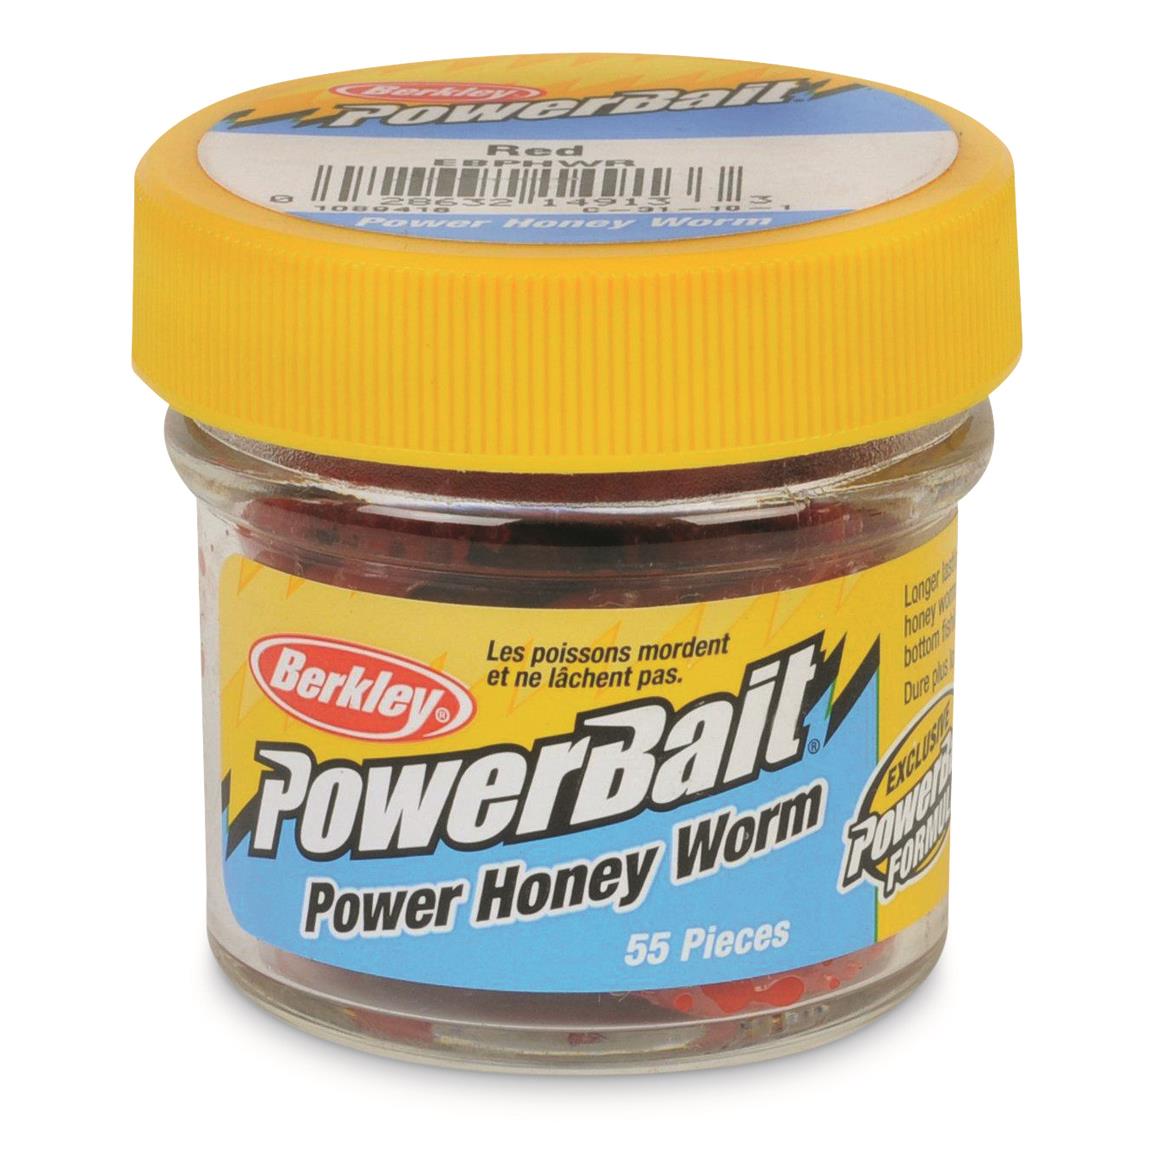 Berkley Powerbait Power Honey Worms, 55 Count, Red